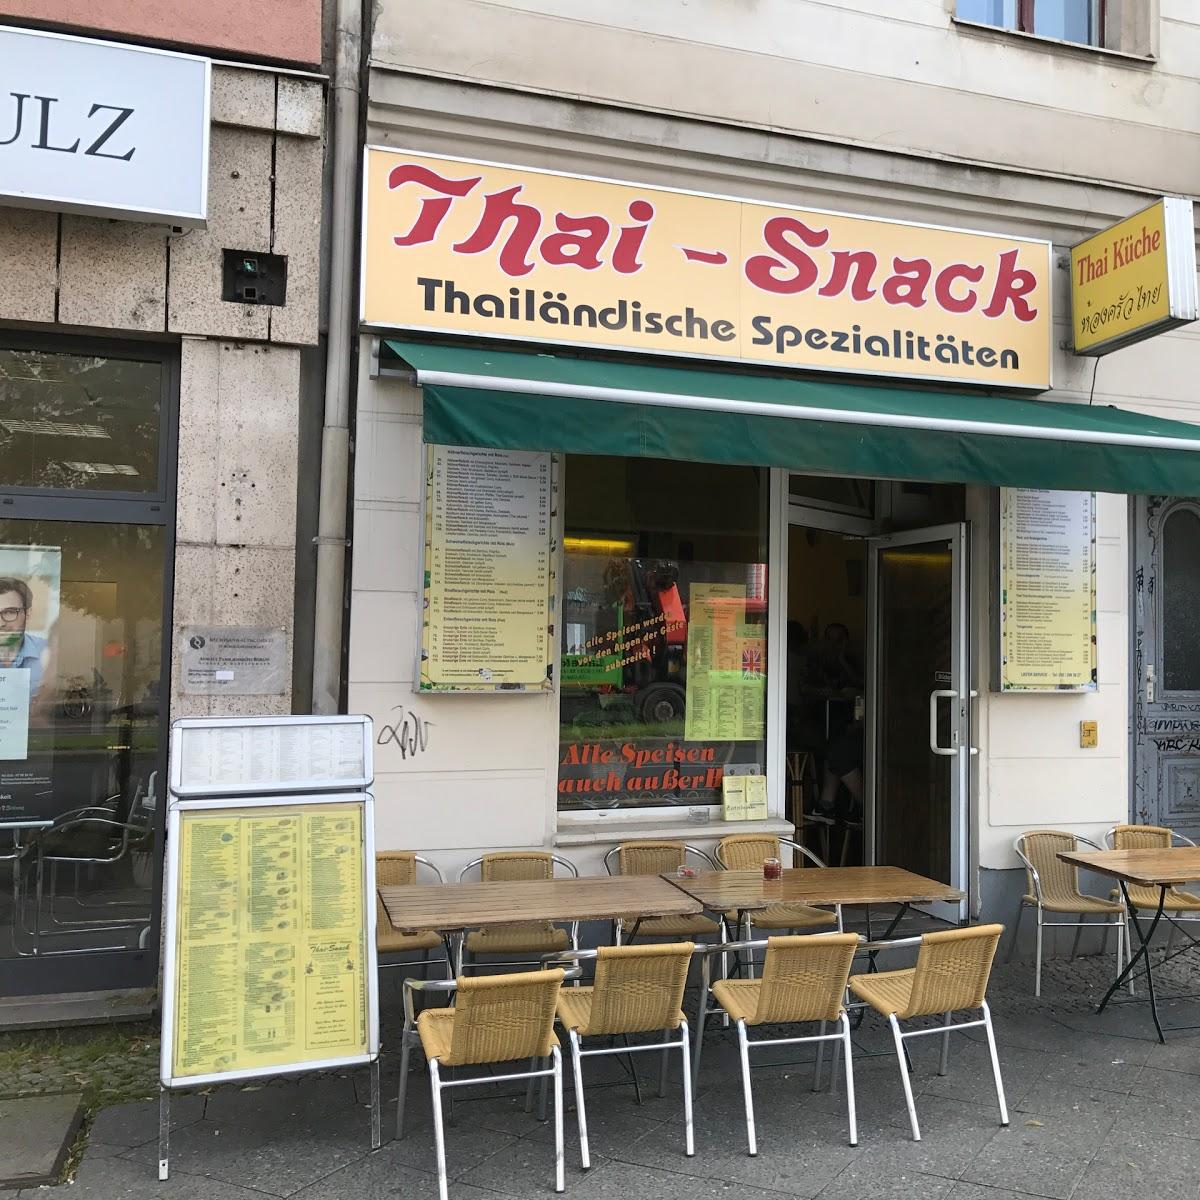 Restaurant "Thai Snack" in Berlin